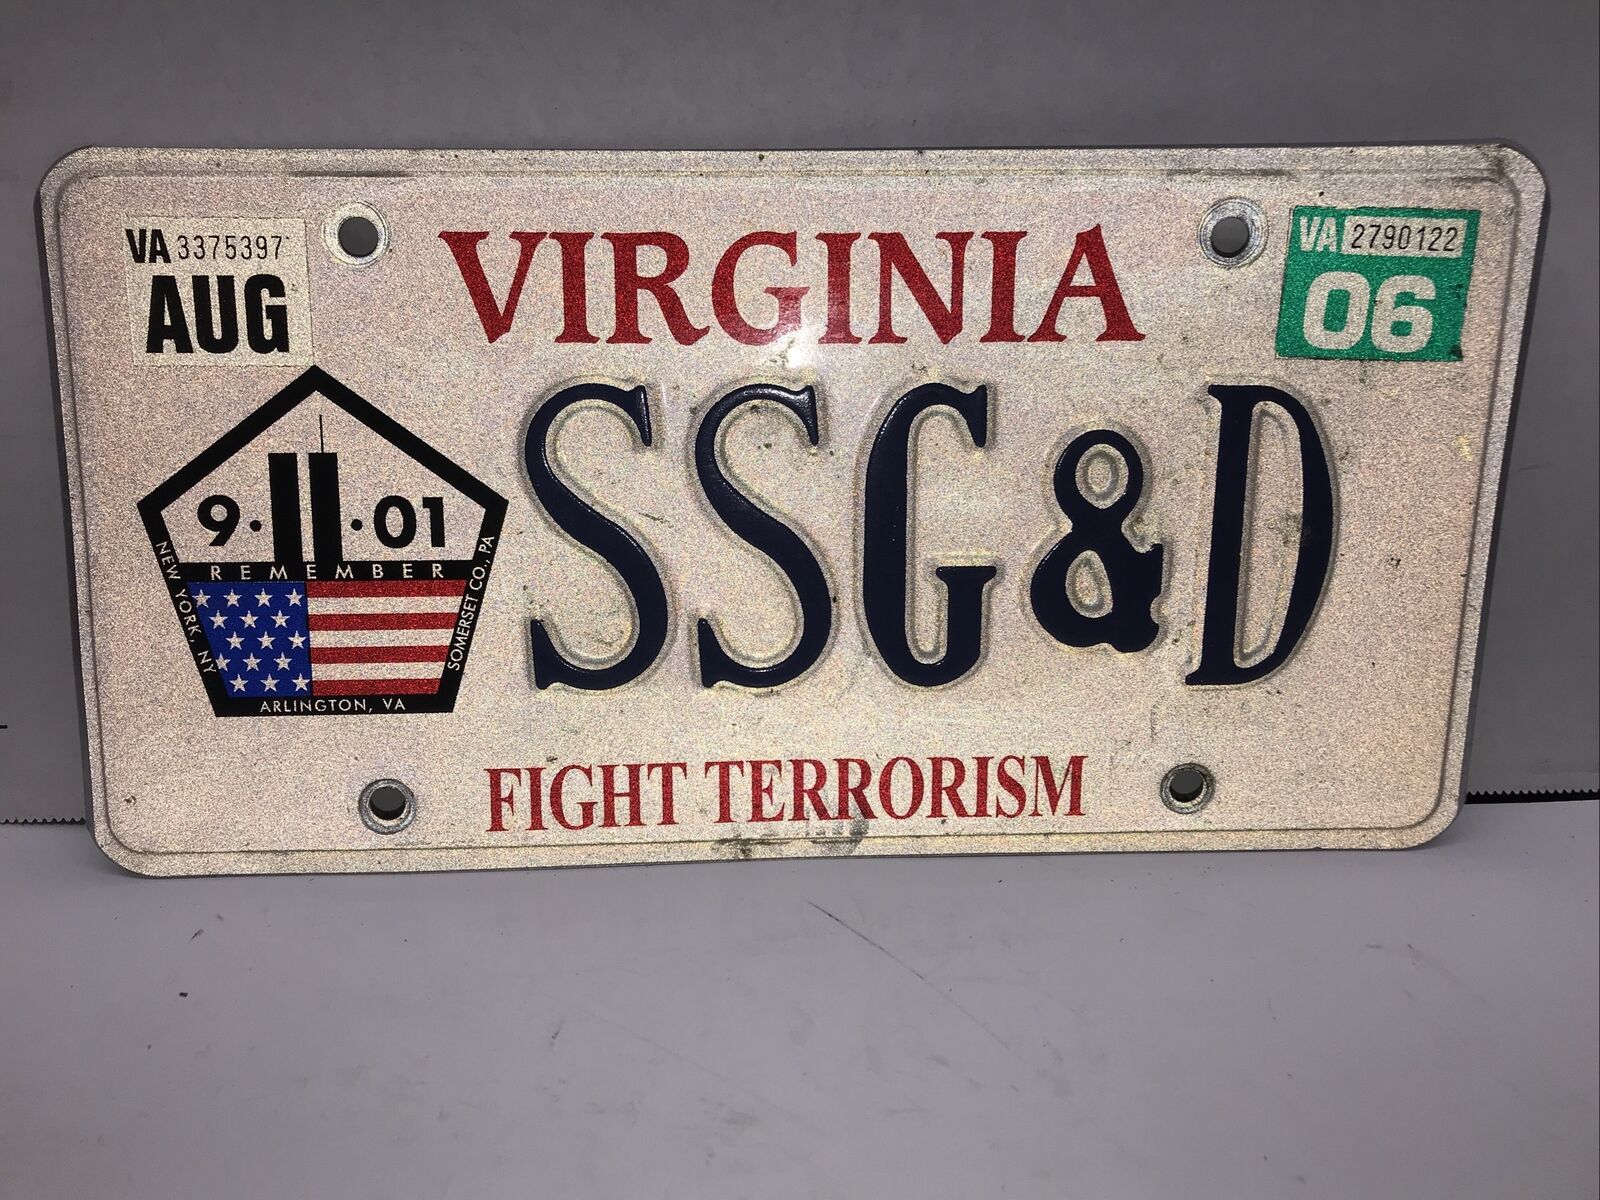 SINGLE VIRGINIA LICENSE PLATE - SSG&D - REMEMBER 9/11 - FIGHT TERRORISM 2006